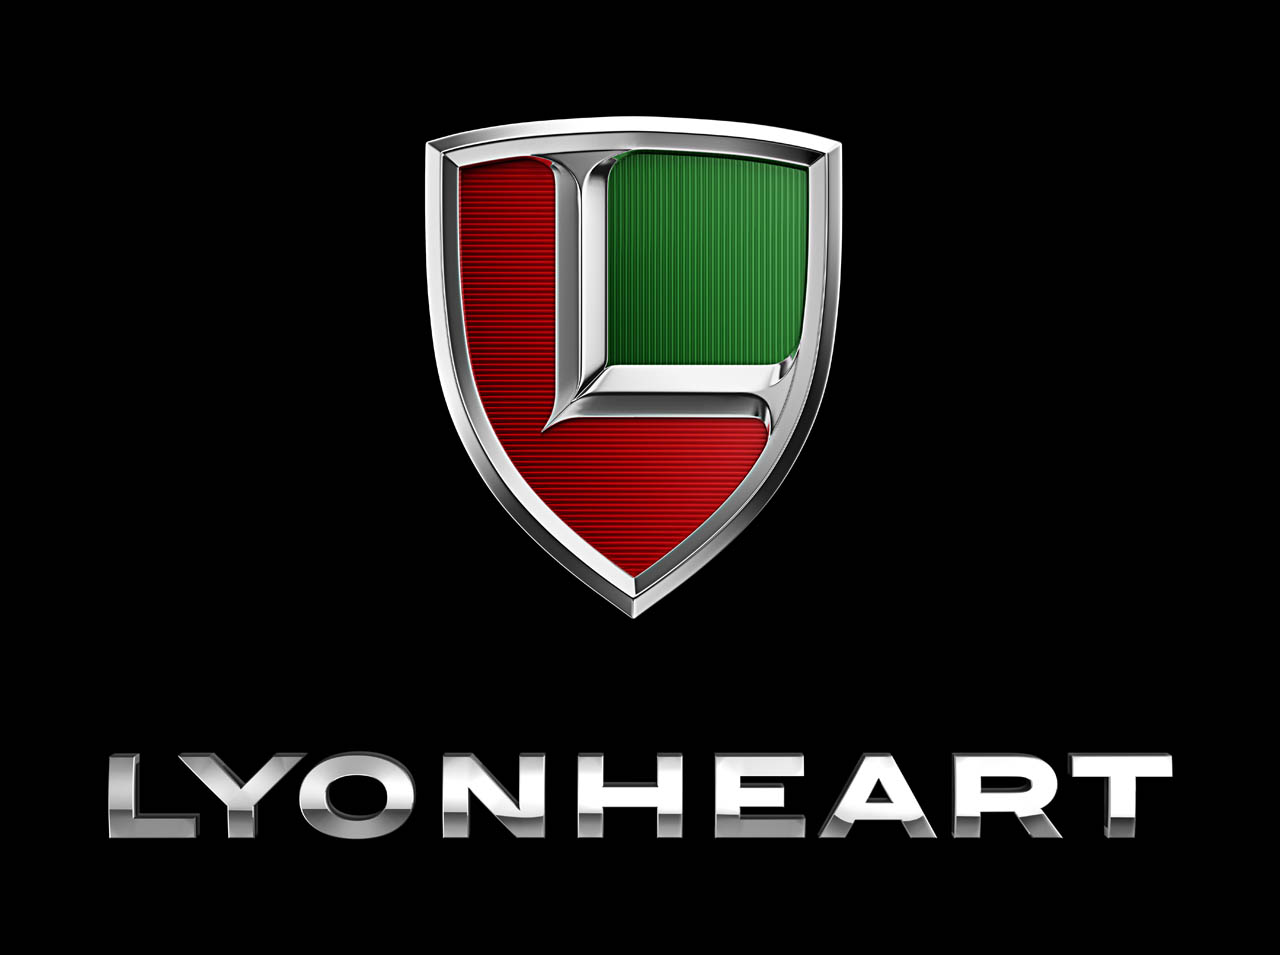 Lyonheart Logo Wallpaper